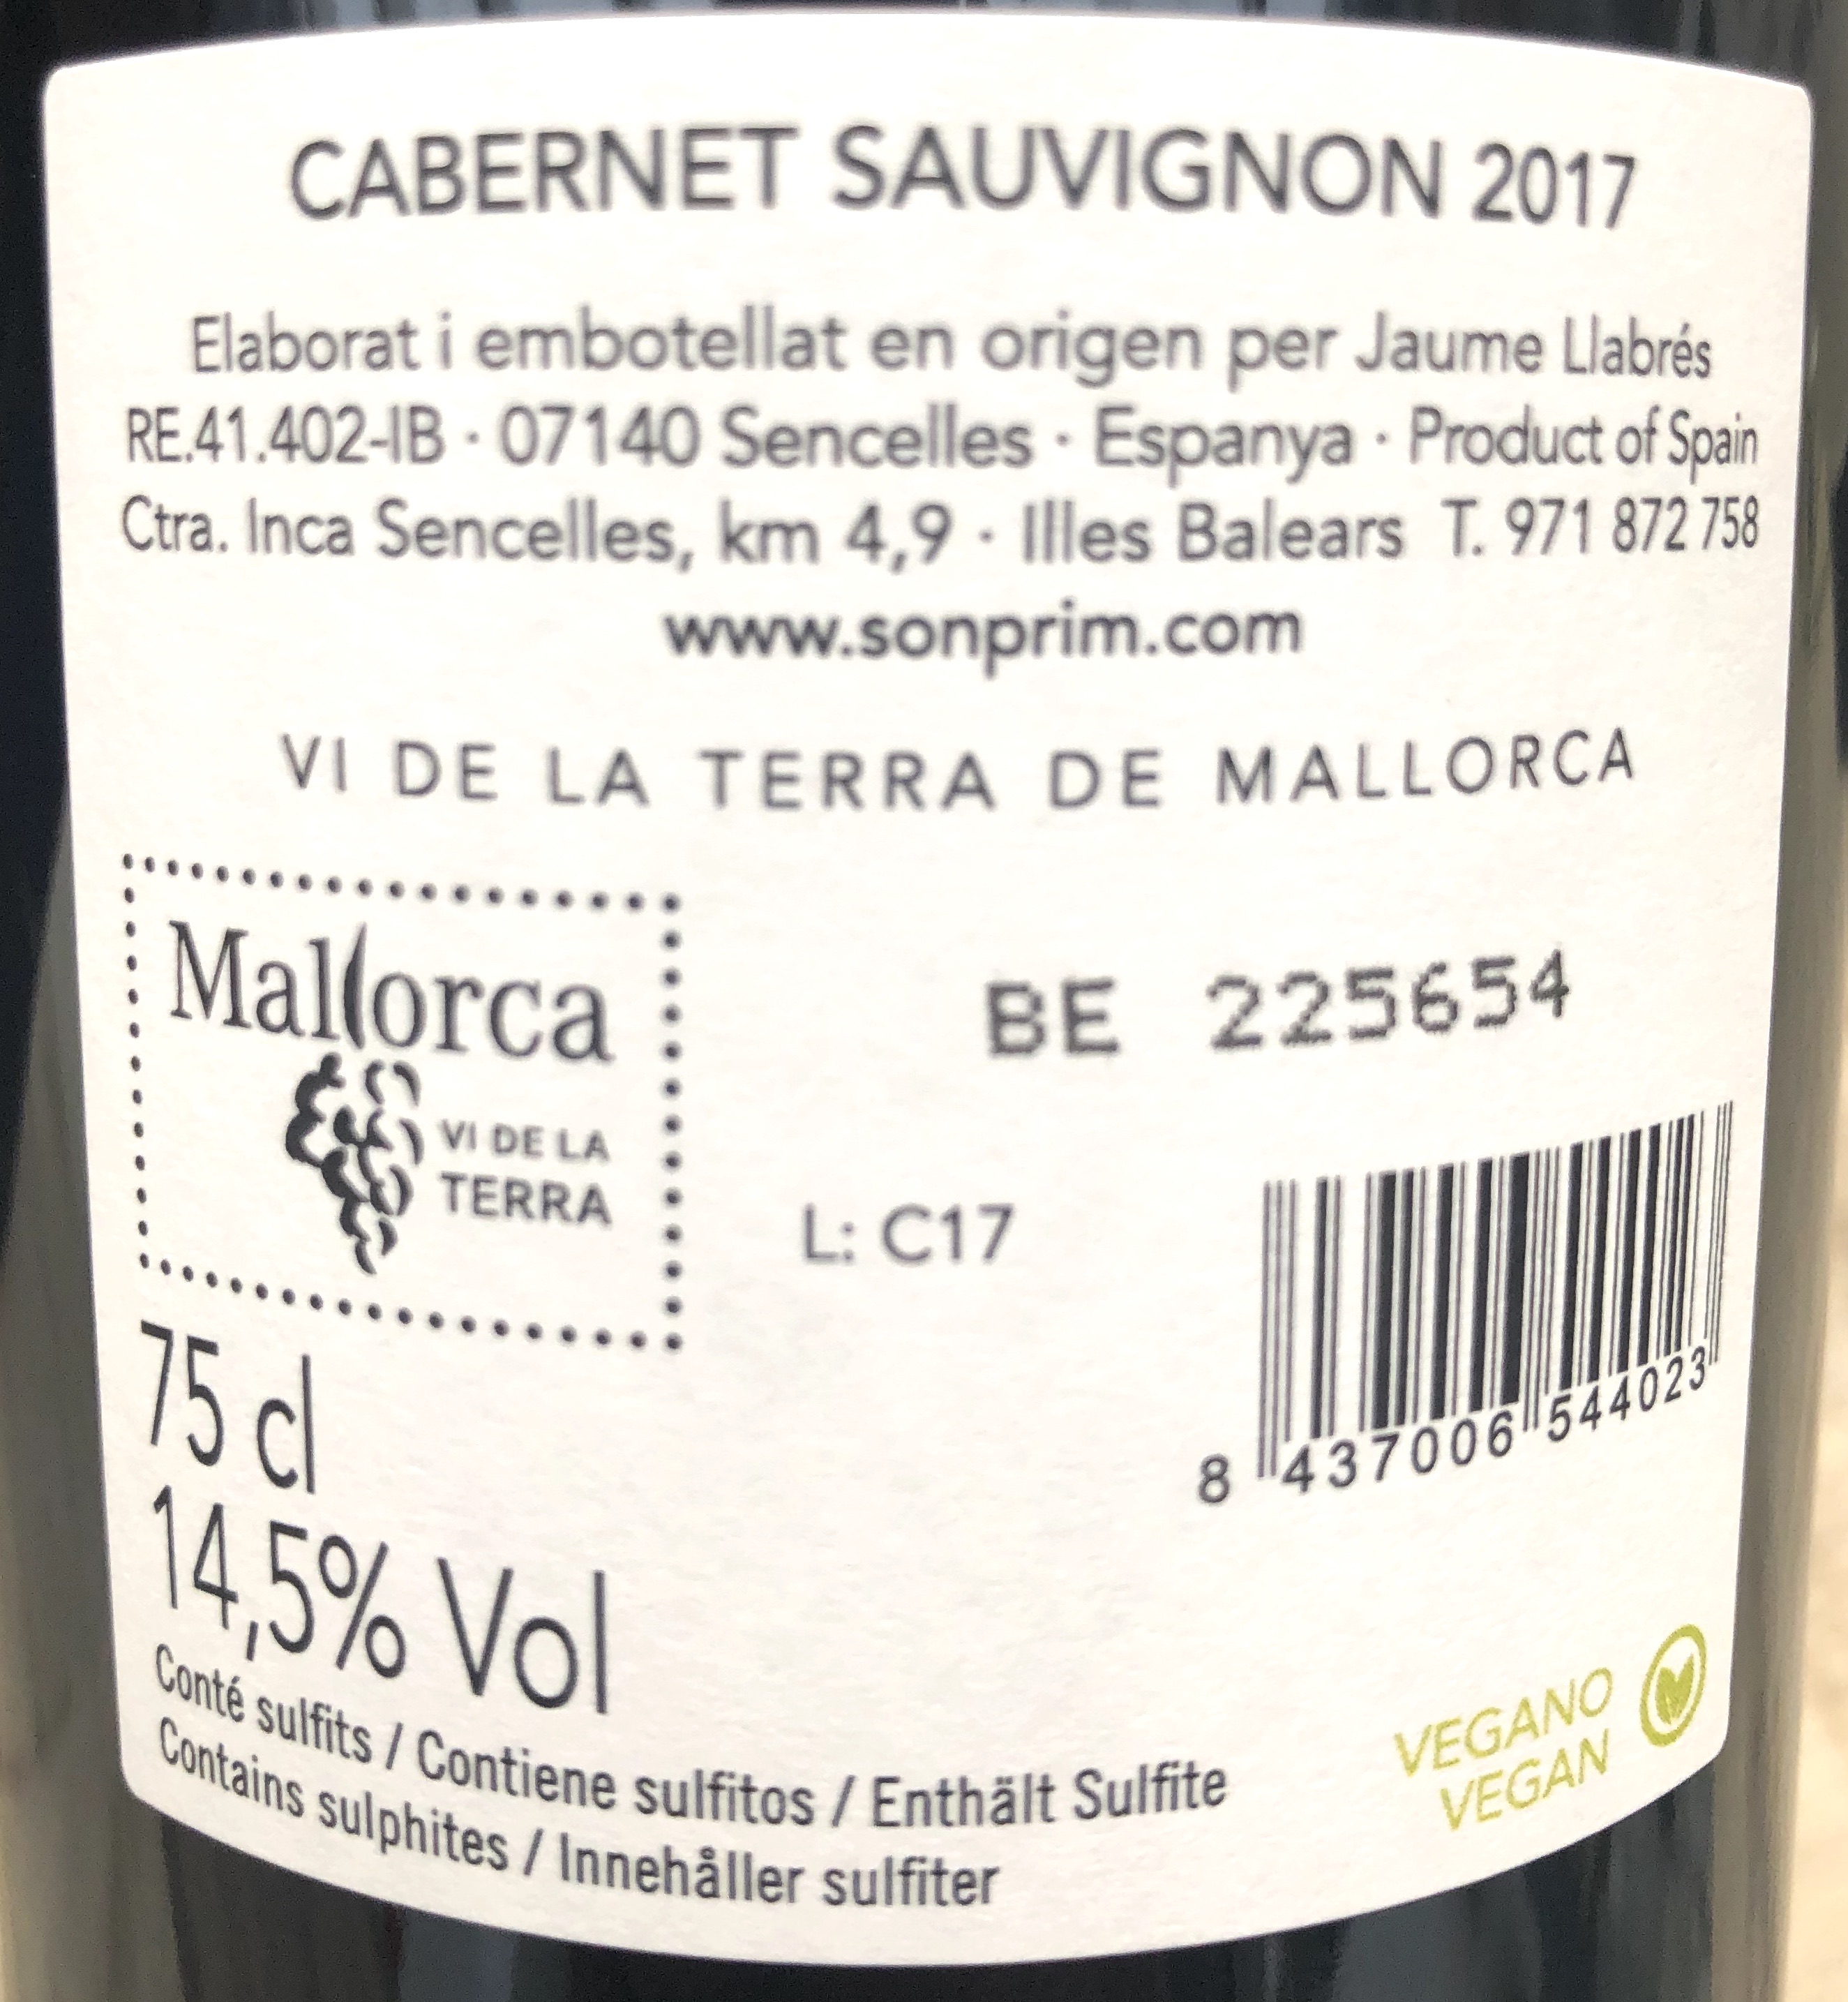 Cabernet Sauvignon 2017